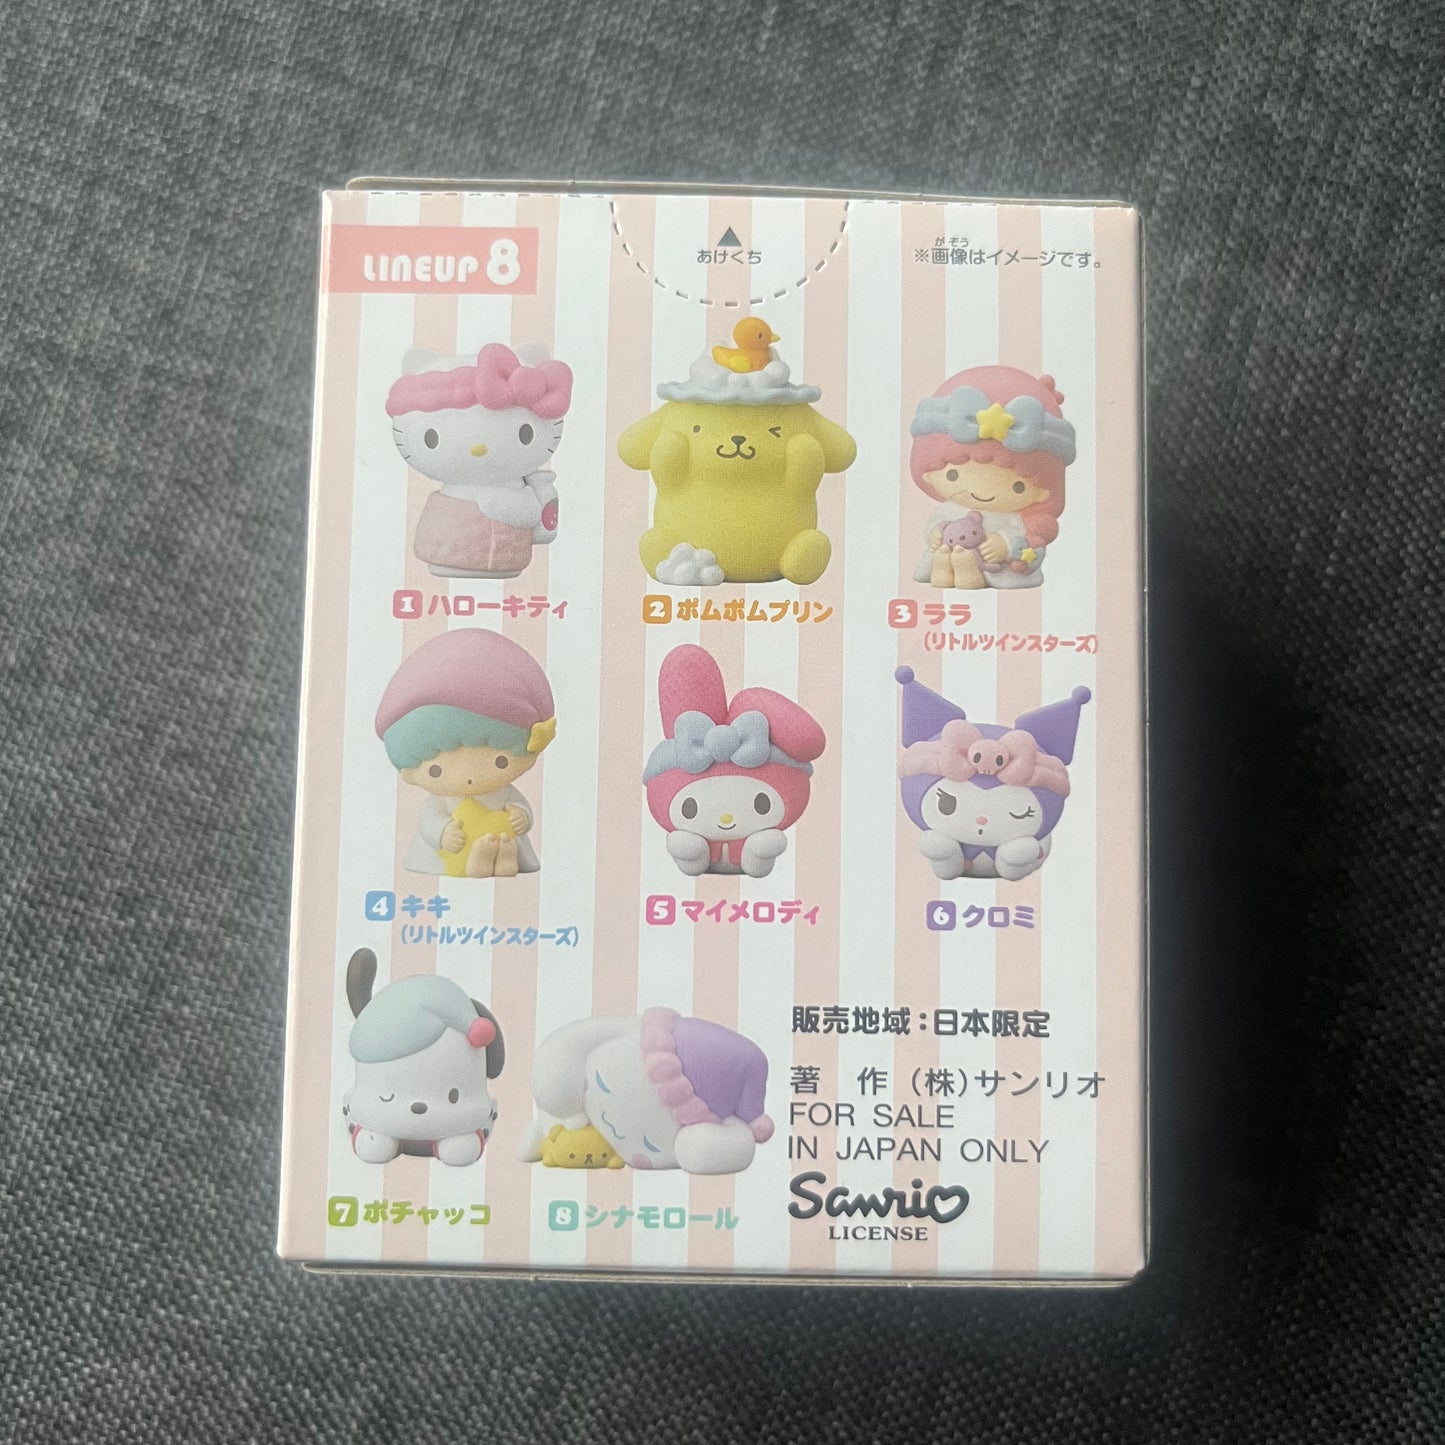 Sanrio Mini Figures Blind Boxes